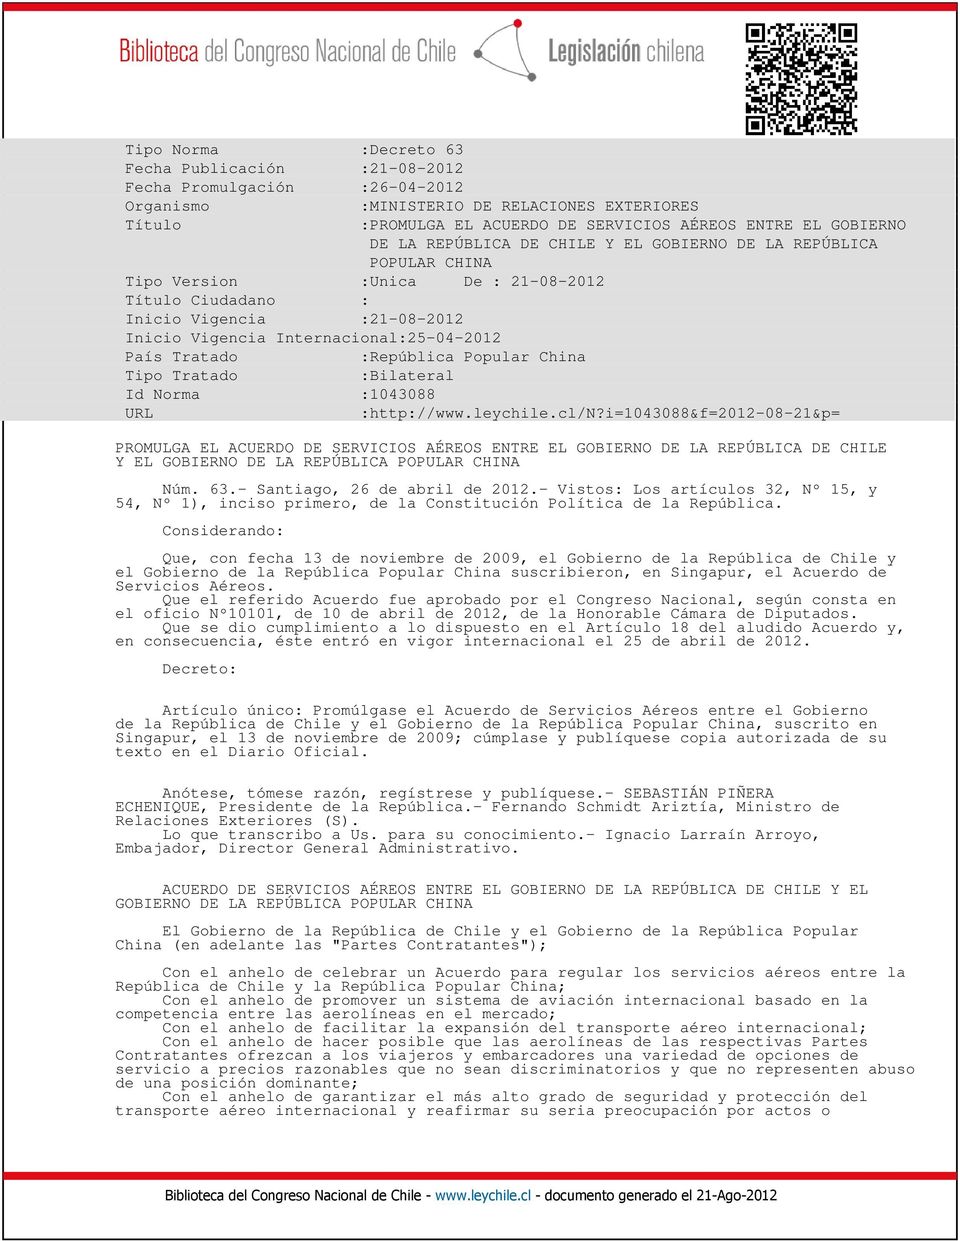 Tratado :República Popular China Tipo Tratado :Bilateral Id Norma :1043088 URL :http://www.leychile.cl/n?